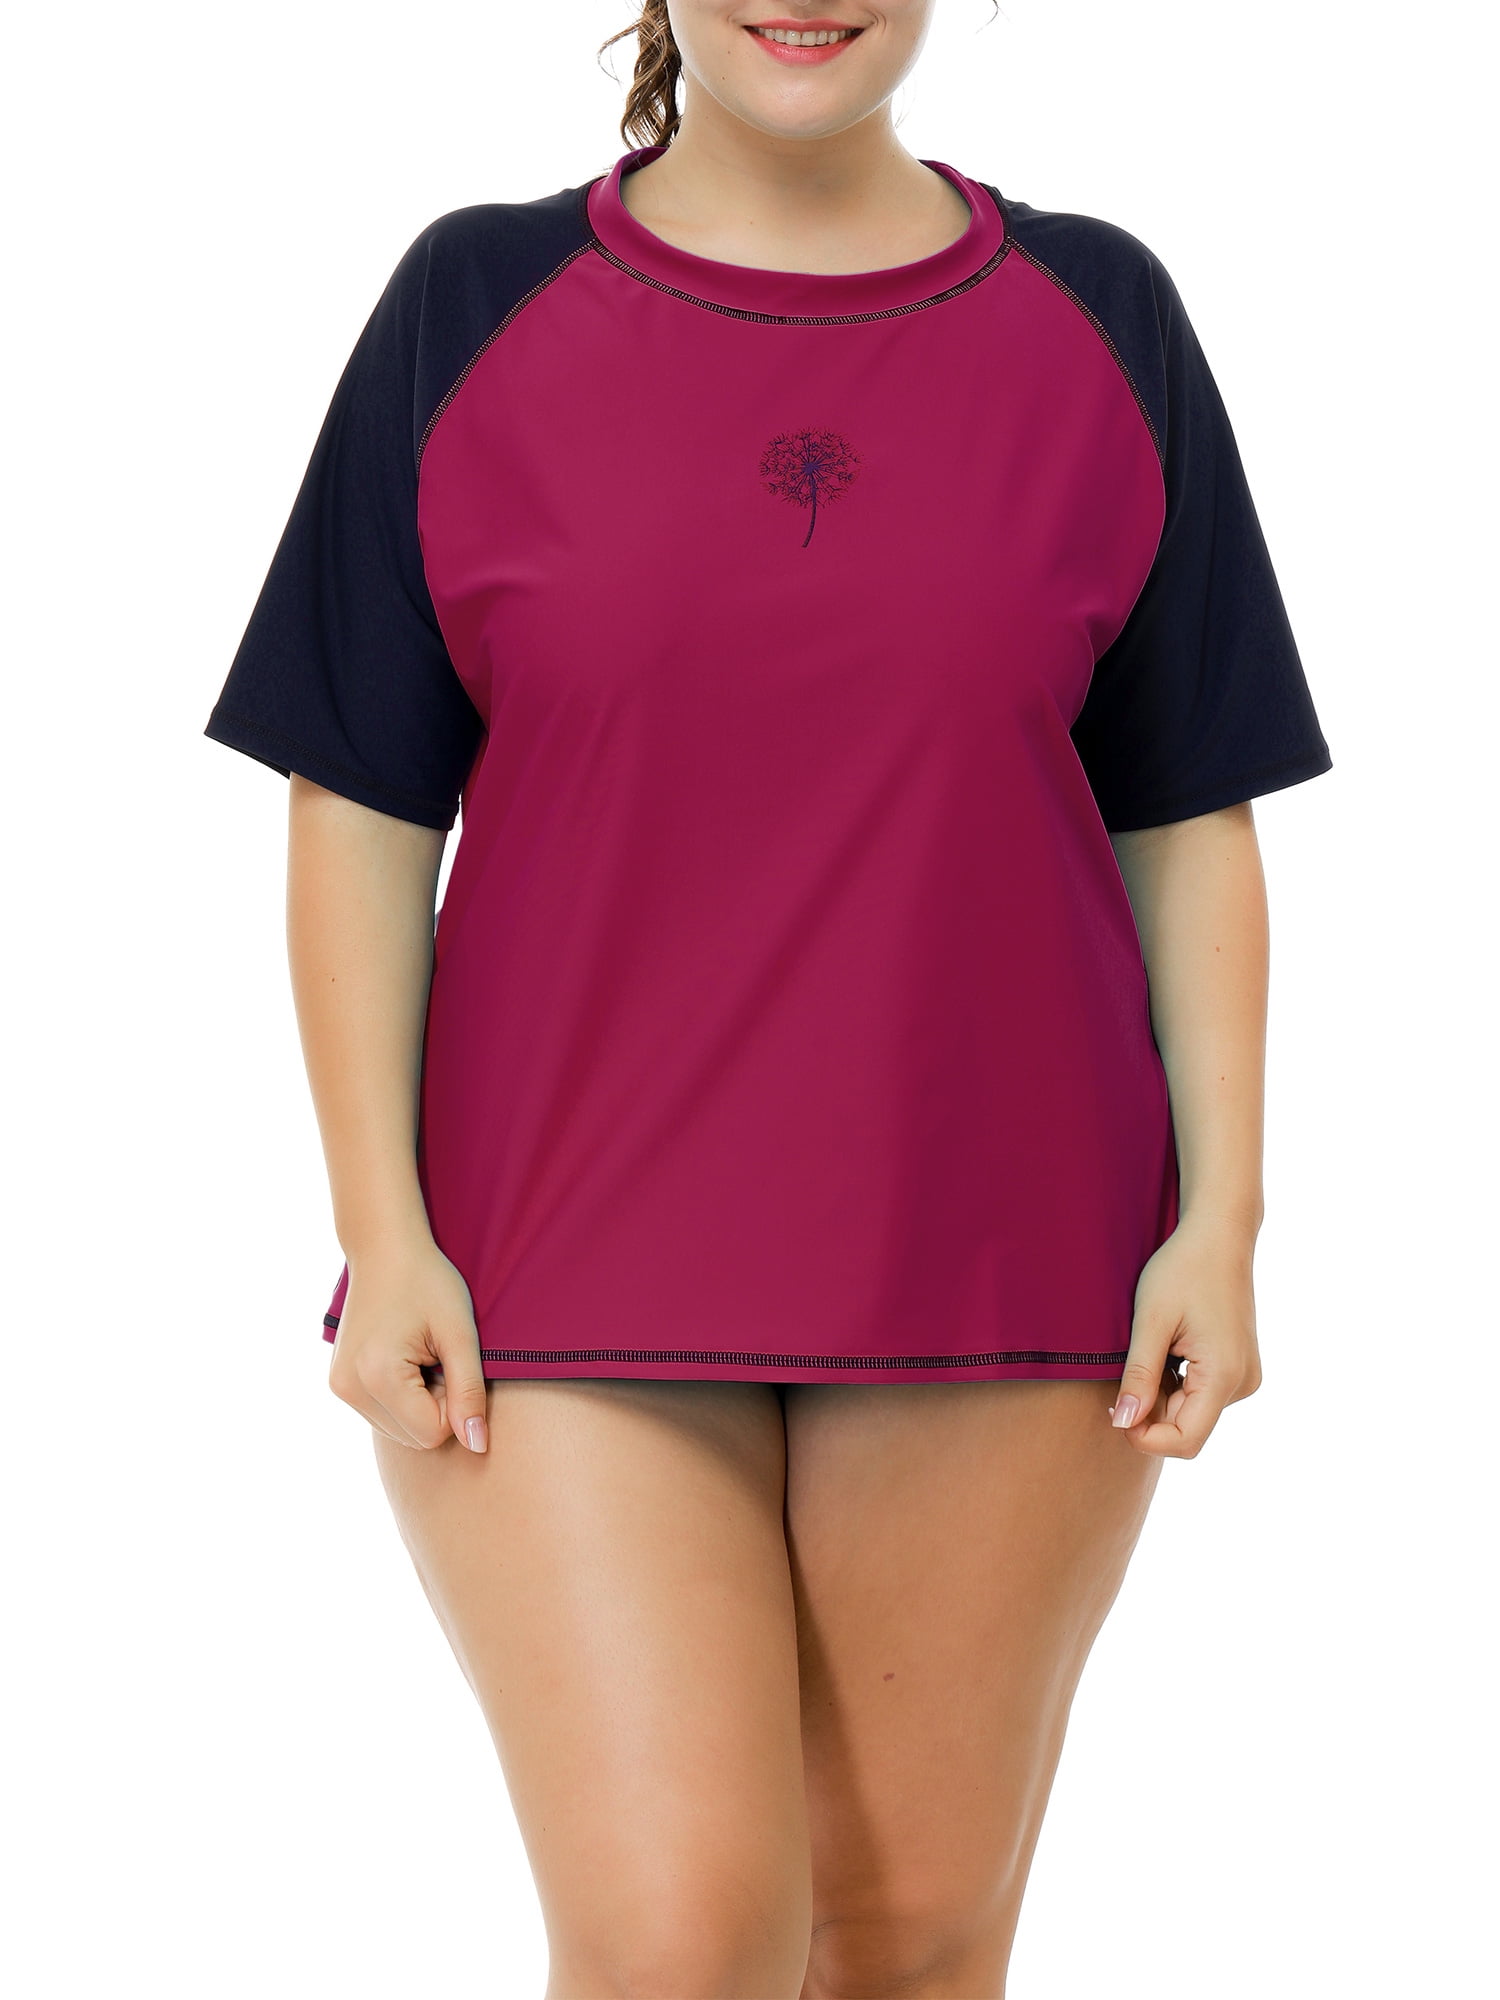 Charmo Women Plus Size Rash Guard Short Sleeve Shirt Rashguard Swimwear Top - Walmart.com